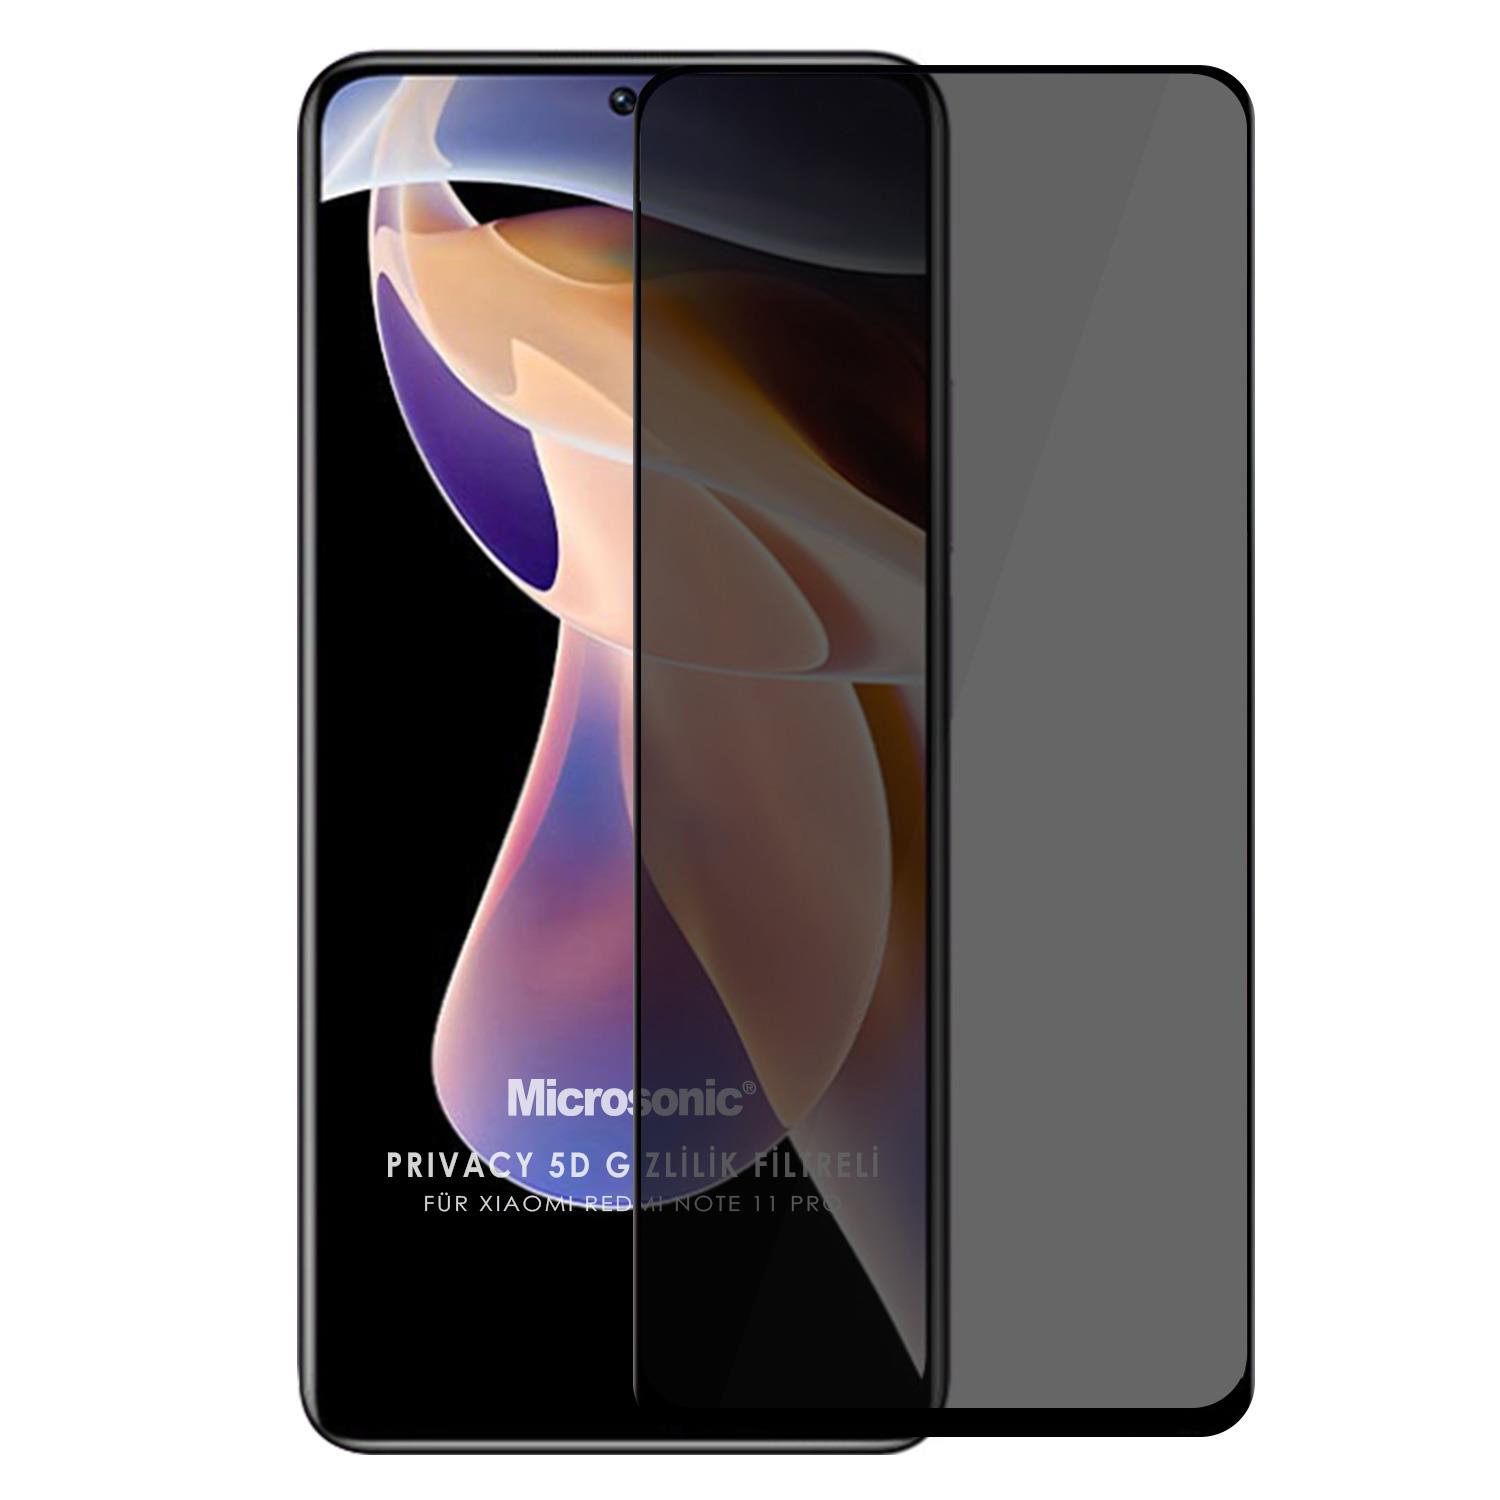 Microsonic Xiaomi Redmi Note 11 Pro 5G Privacy 5D Gizlilik Filtreli Cam Ekran Koruyucu Siyah